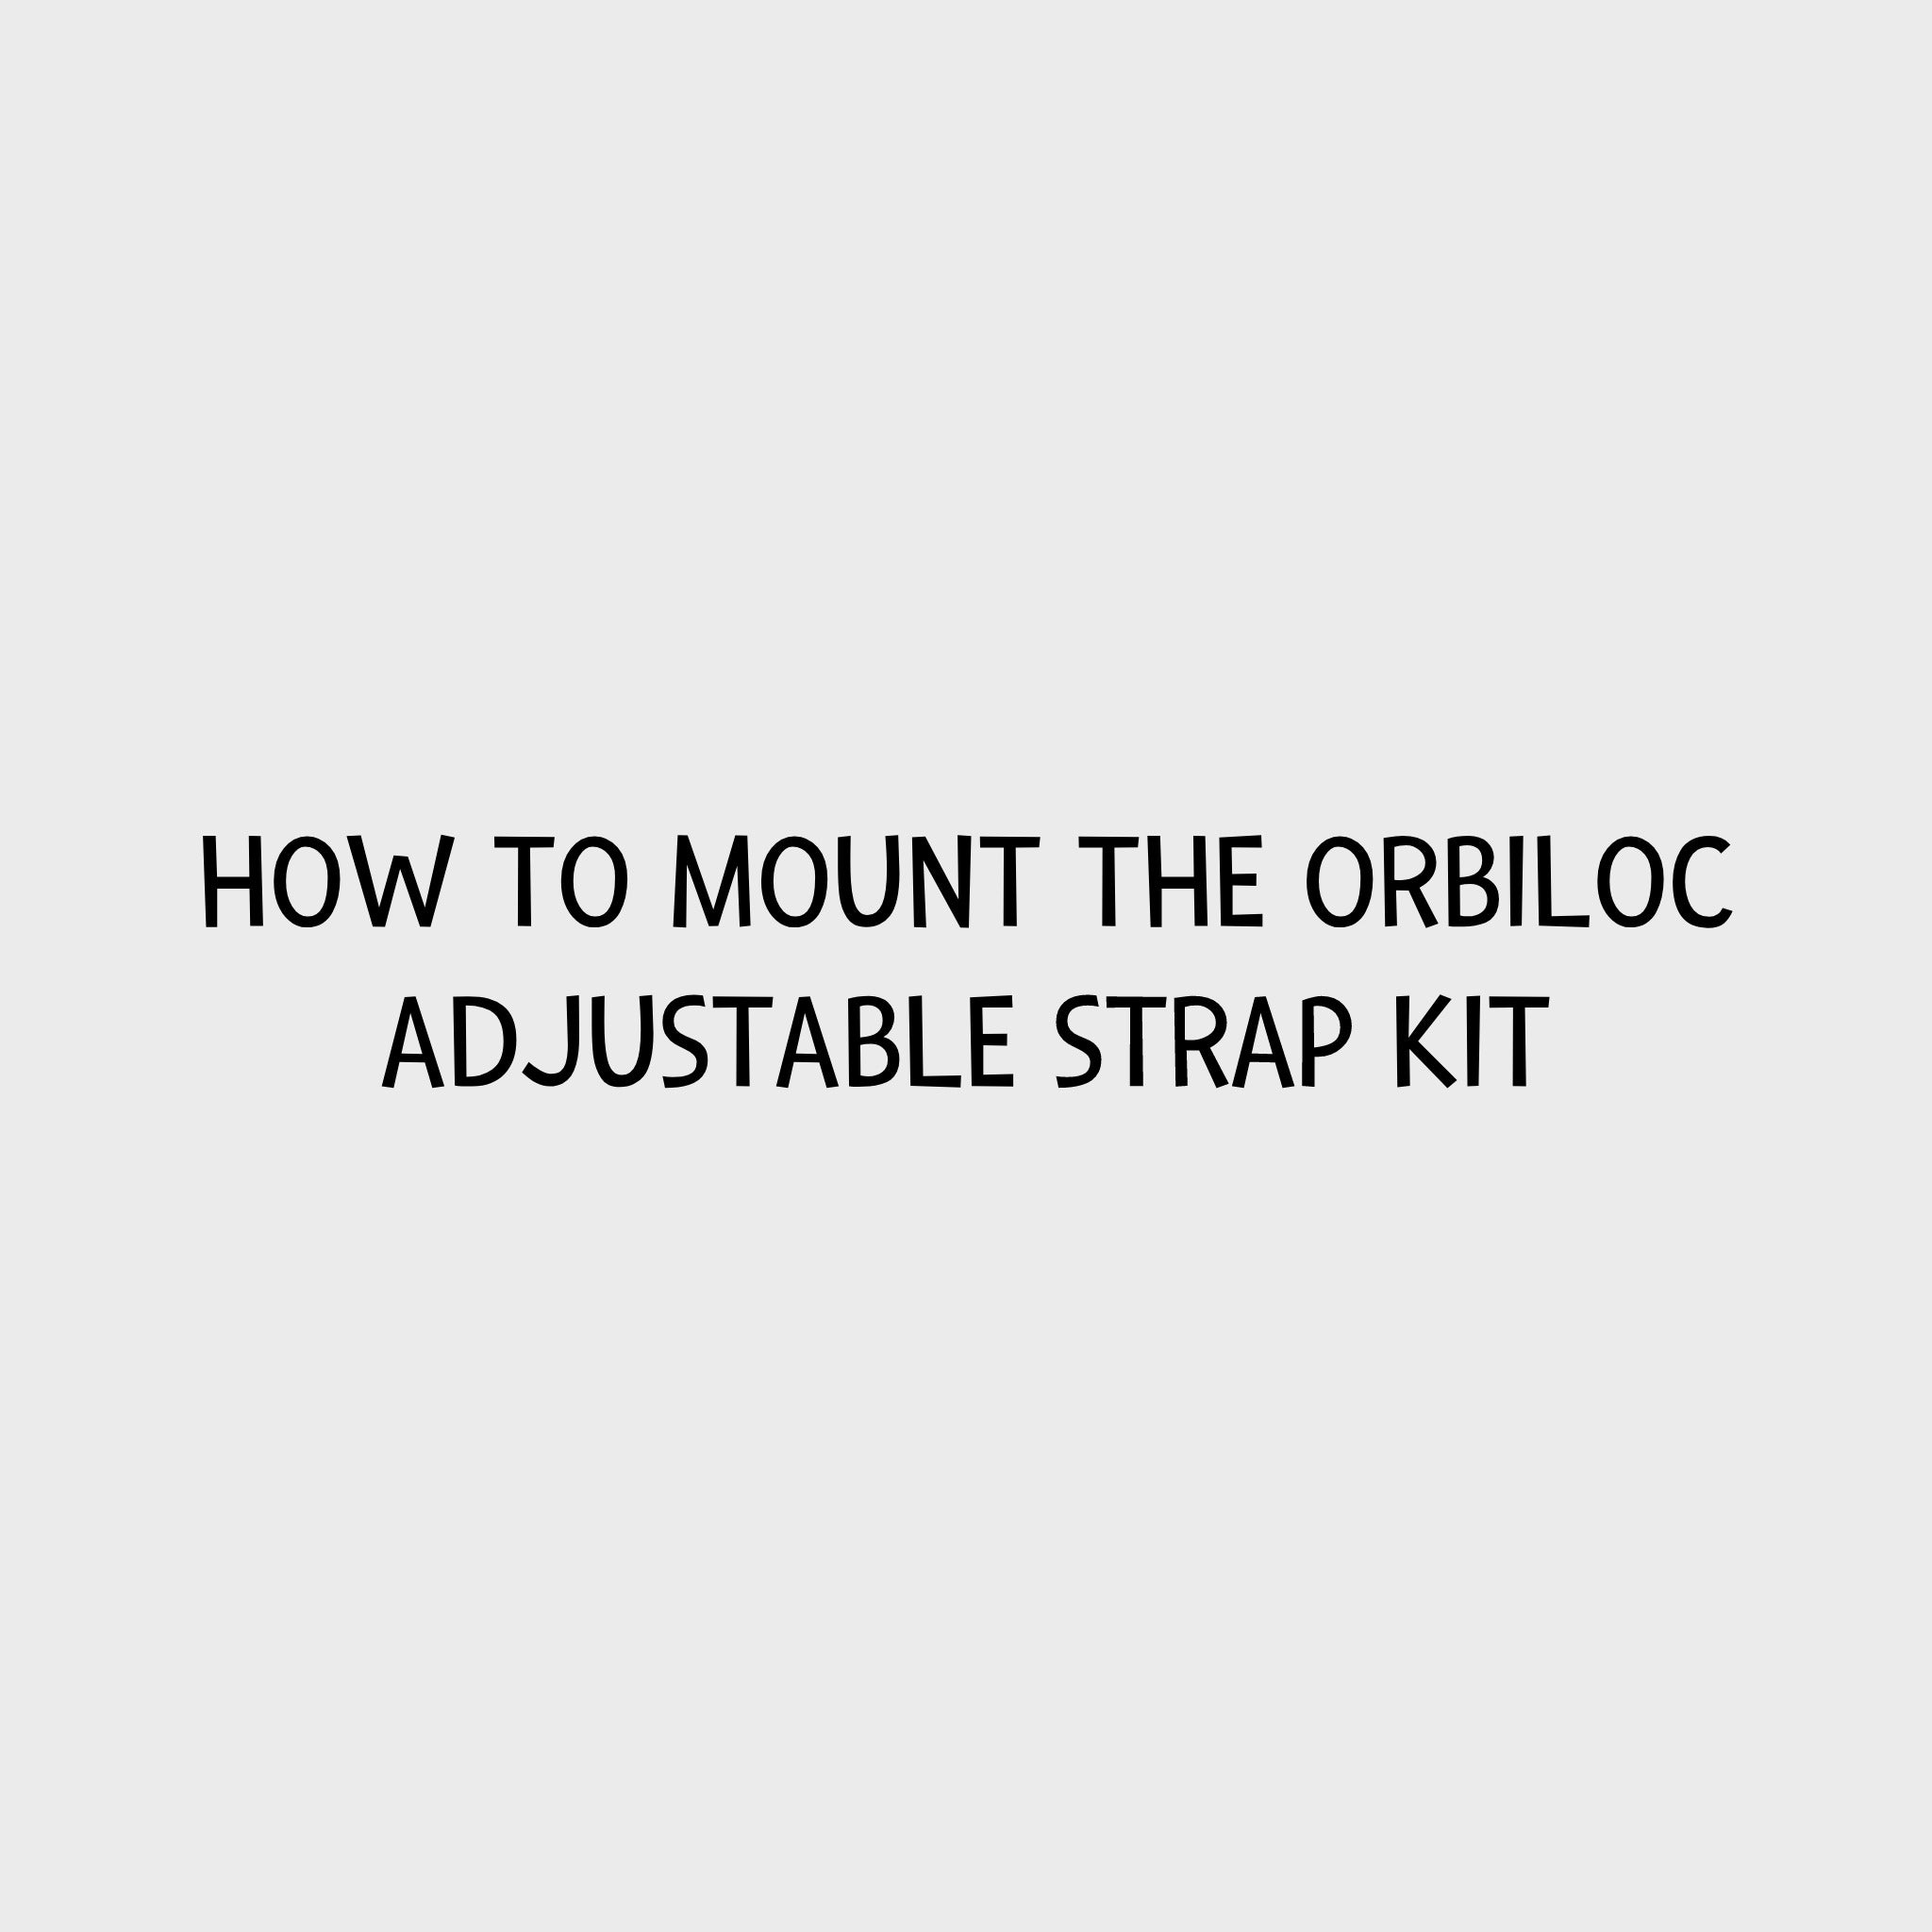 Video - How to mount the Orbiloc Adjustable Strap Kit